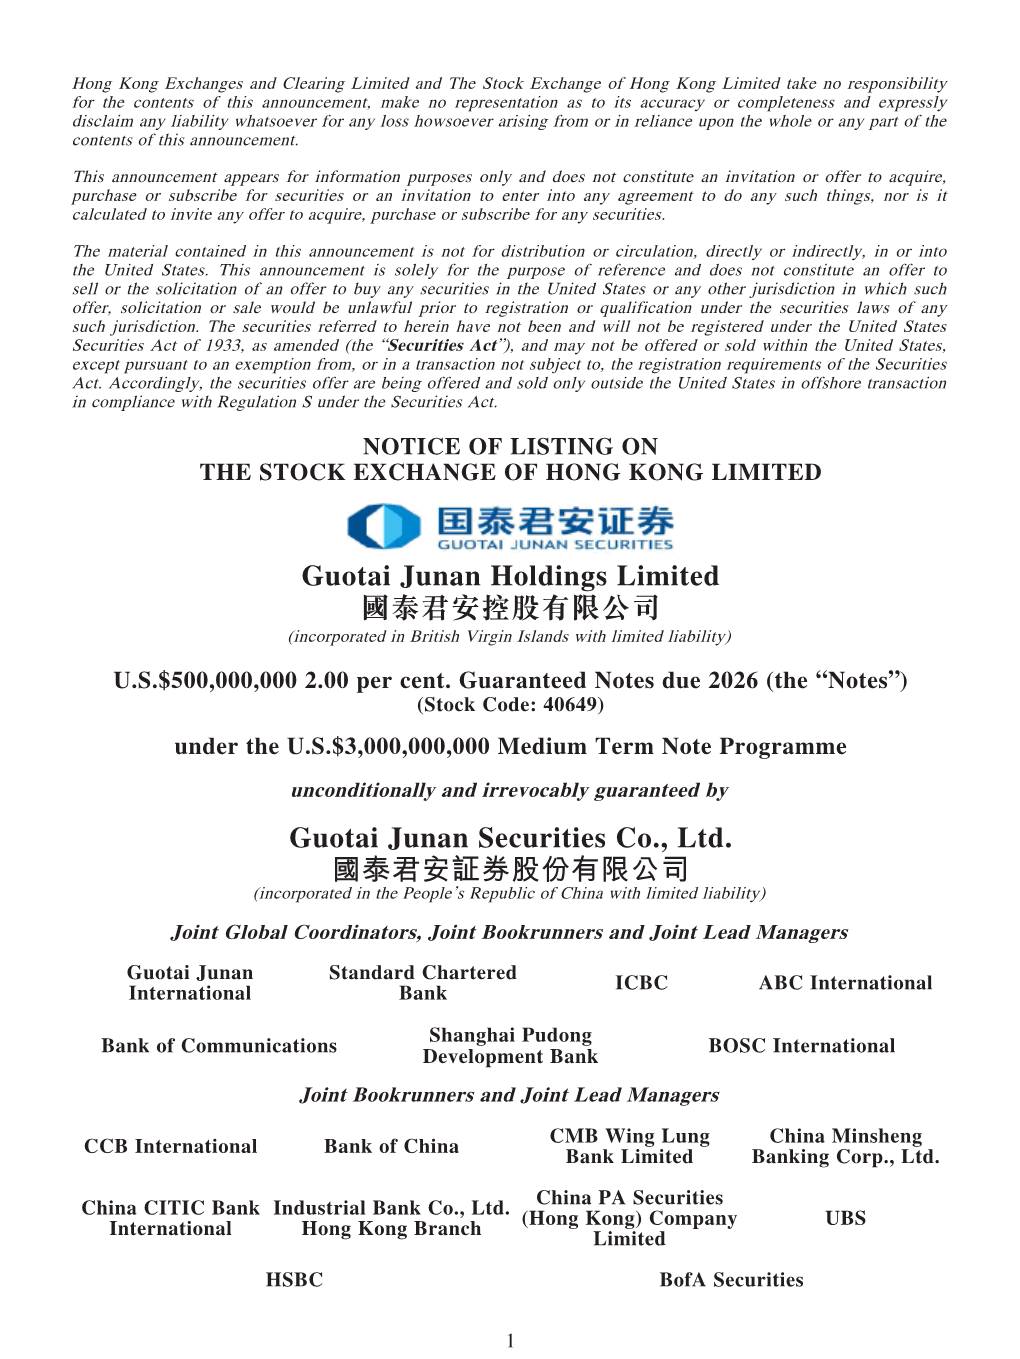 Guotai Junan Holdings Limited 國泰君安控股有限公司 Guotai Junan Securities Co., Ltd. 國泰君安証券股份有限公